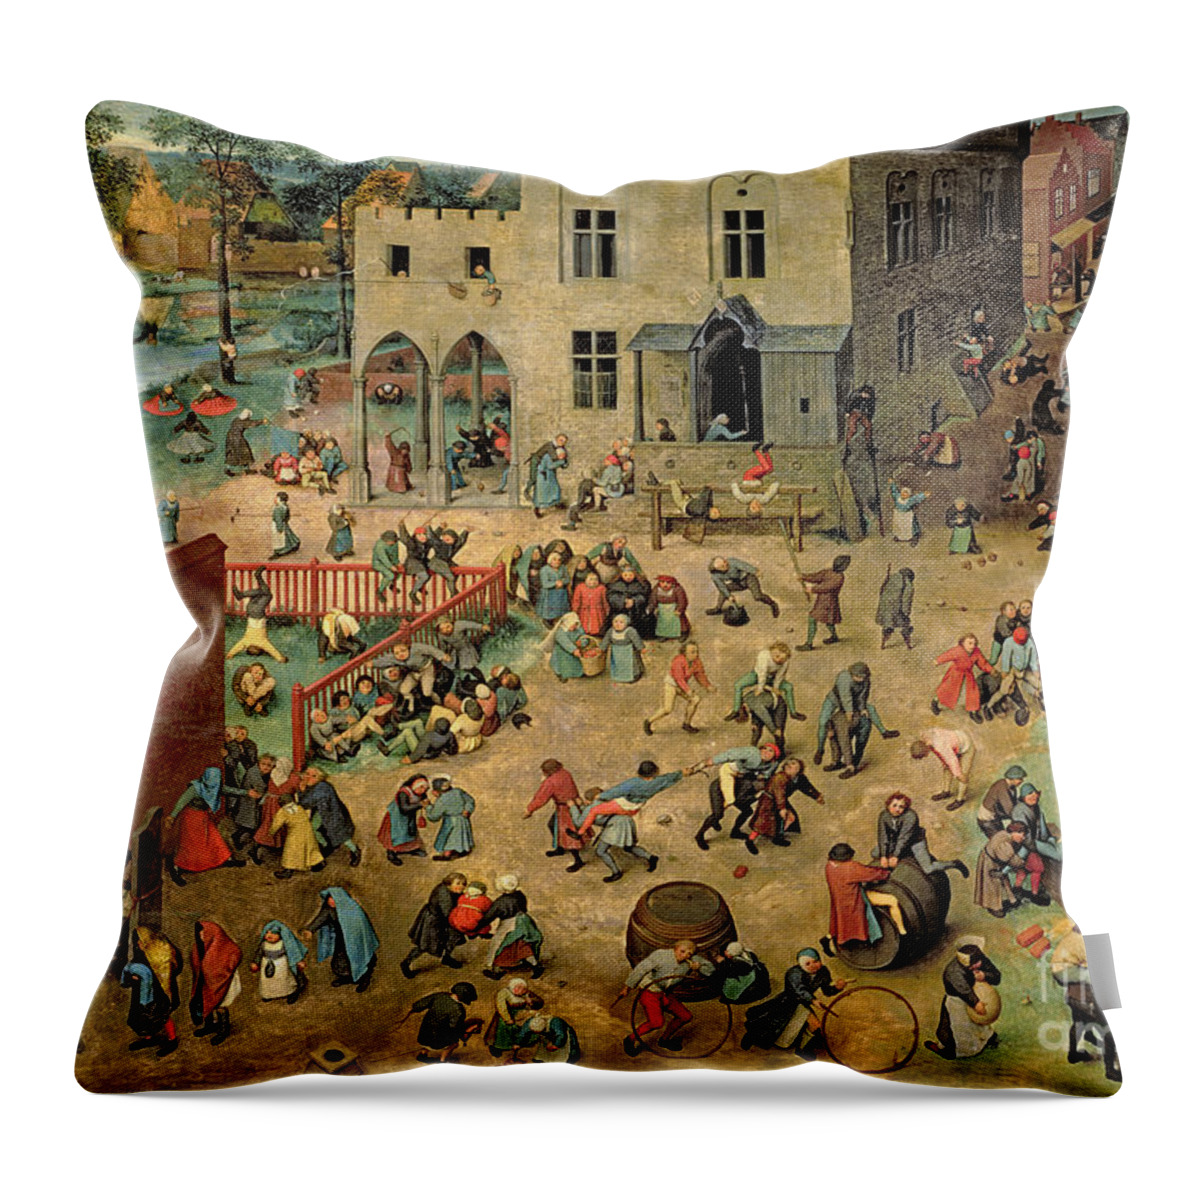 Children Throw Pillow featuring the painting Children's Games by Pieter the Elder Bruegel